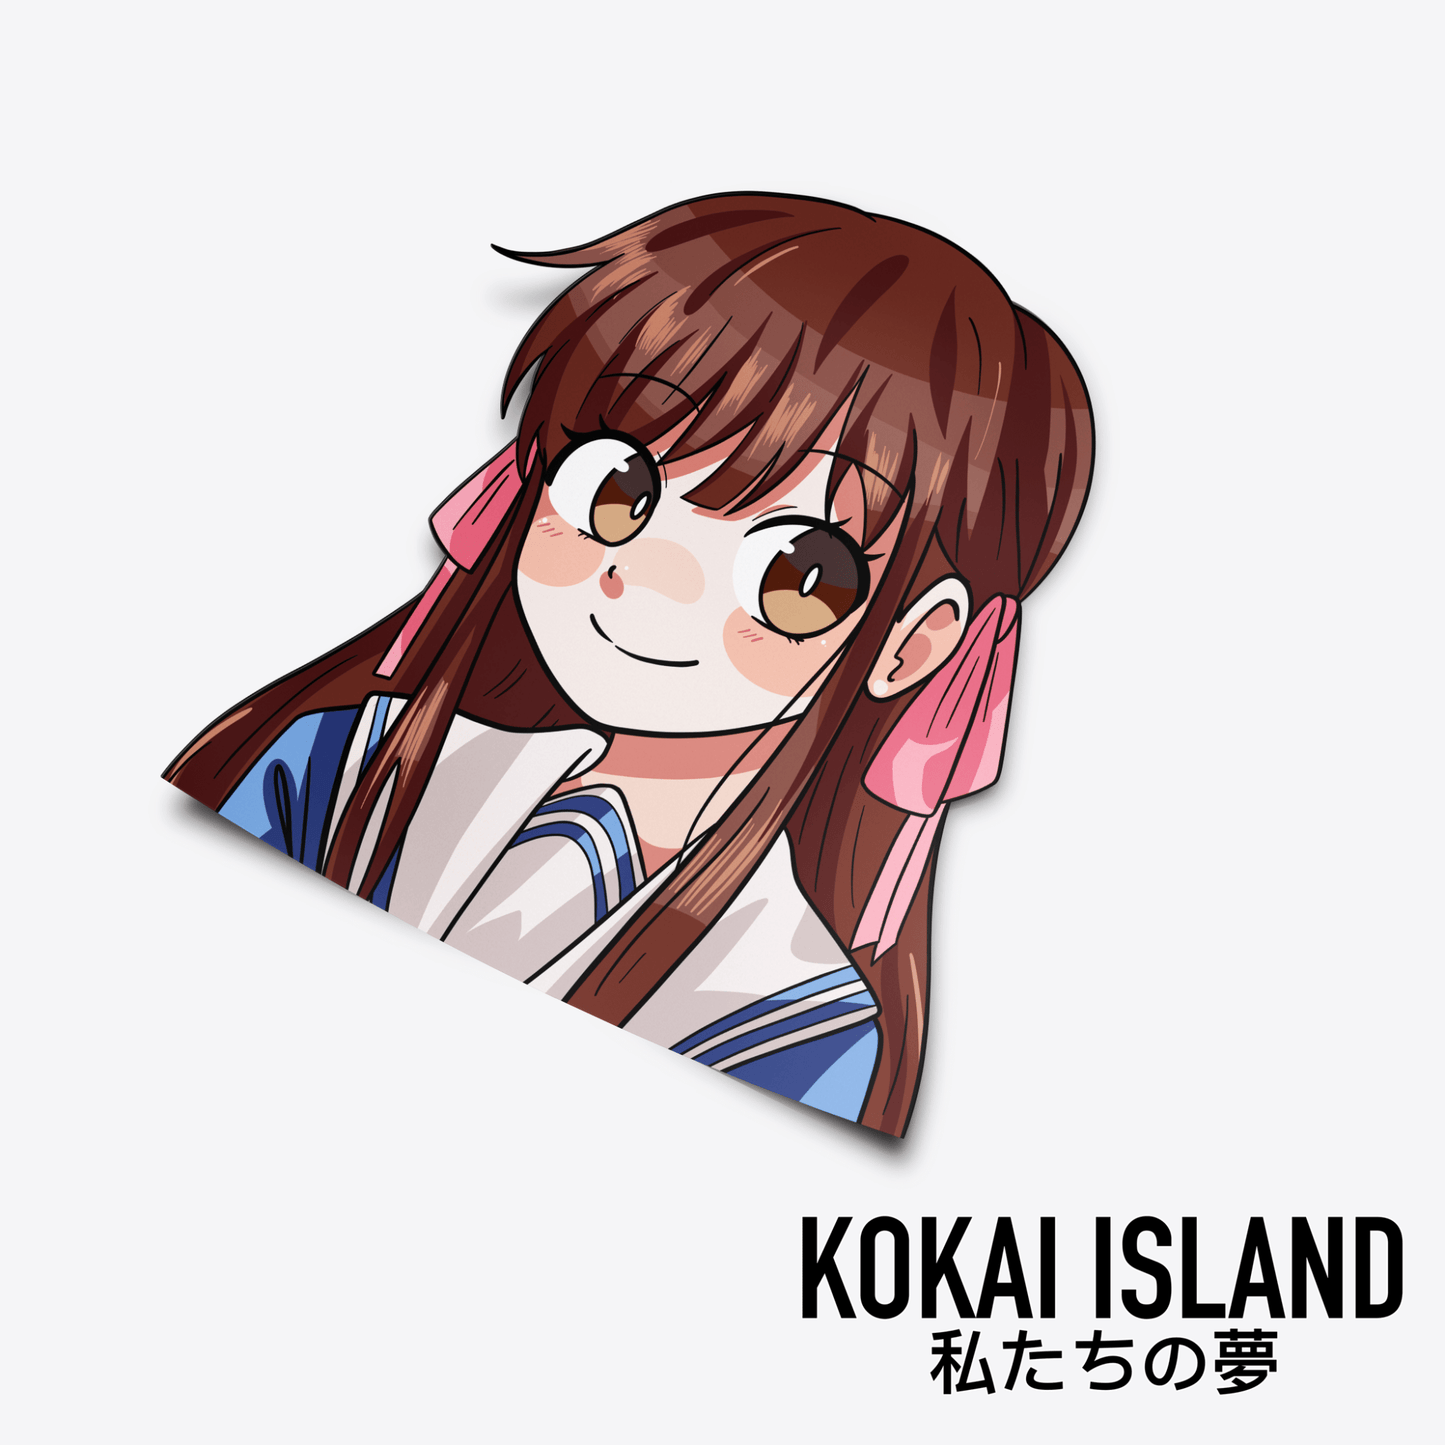 Wholesome Girl DecalDecalKokai Island